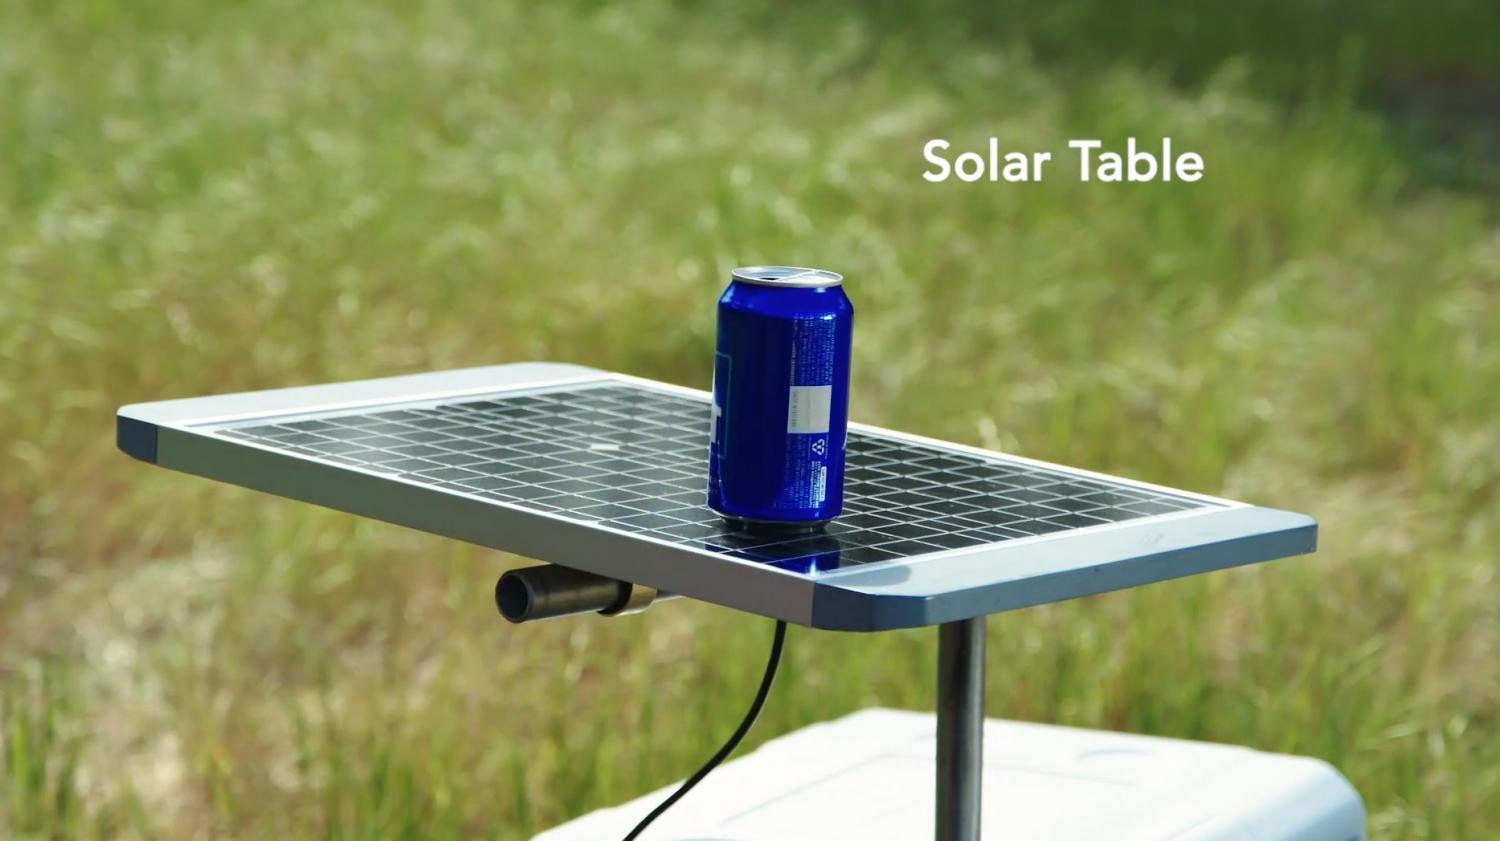 GoSun electric solar powered cooler